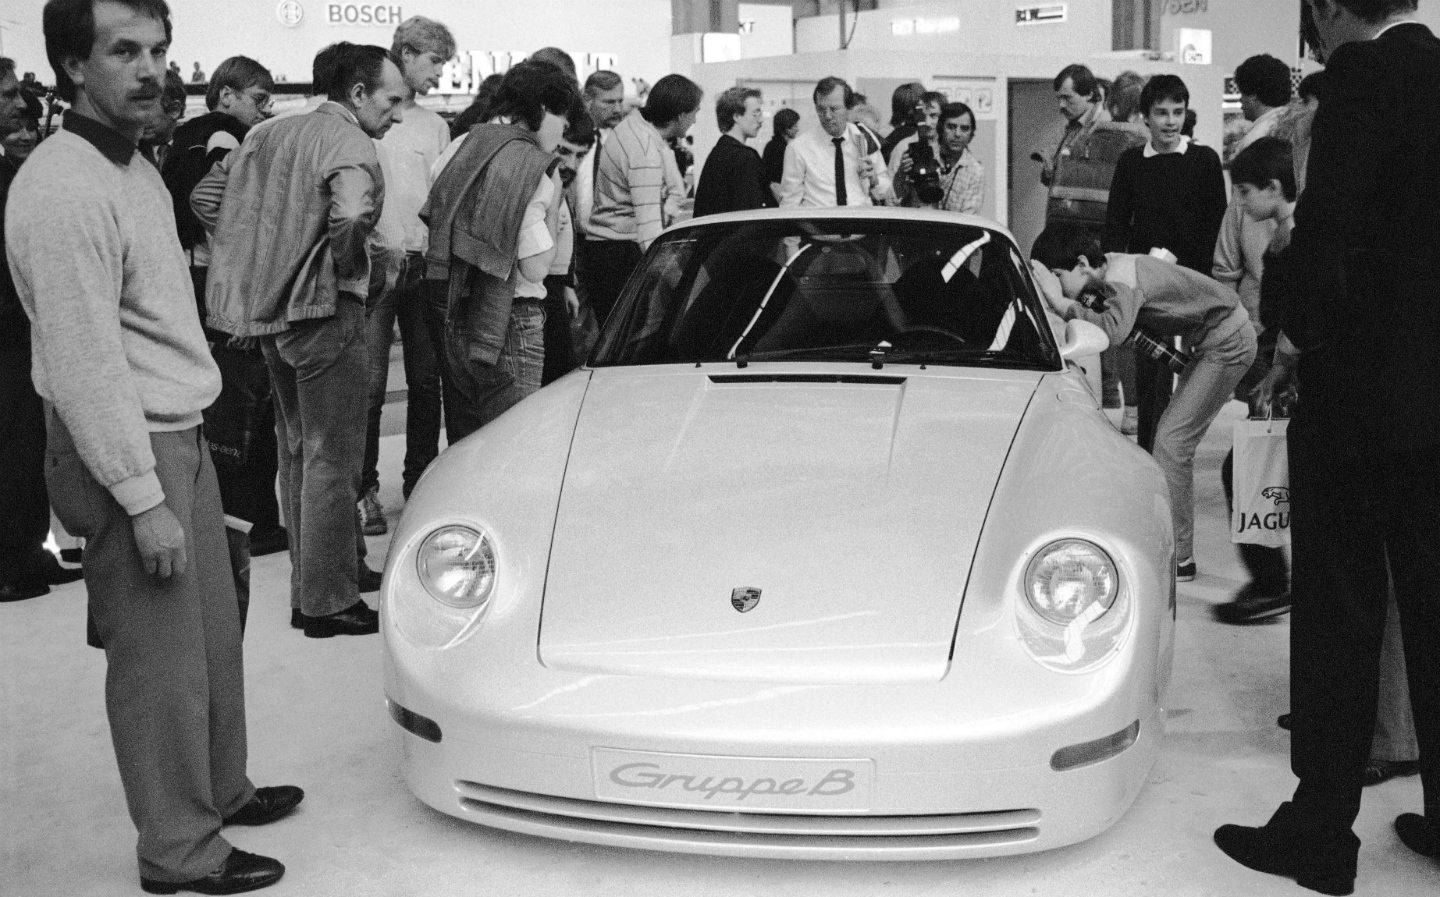 The-Porsche-Gruppe-B-concept-car-at-the-1983-IAA-Frankfurt-motor-show